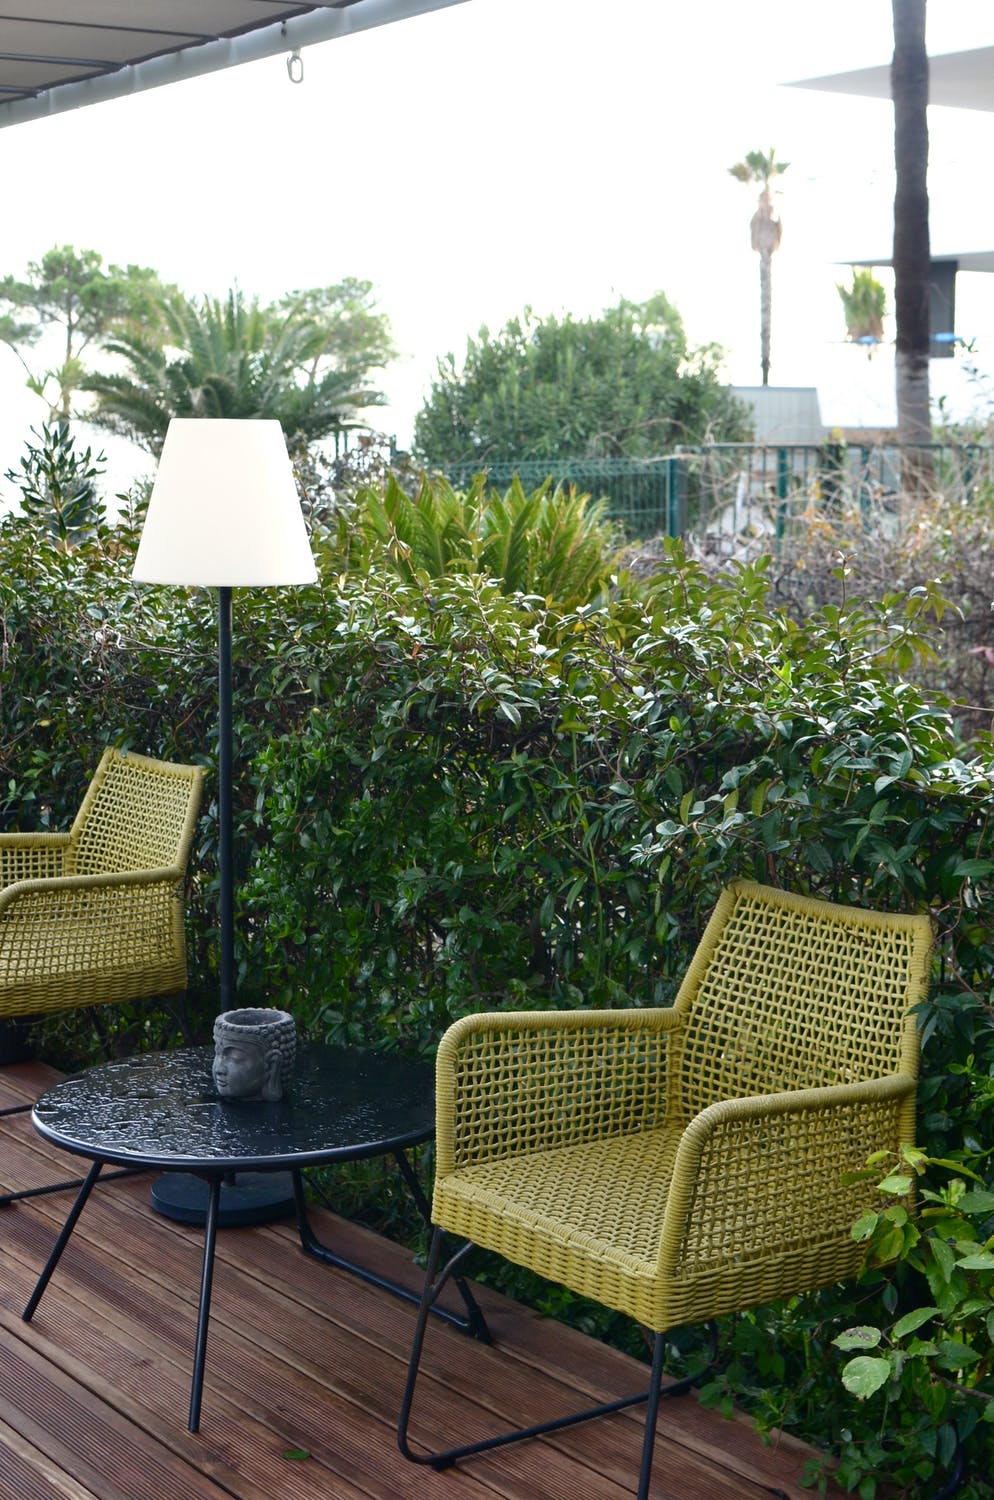 Turn Your Backyard Inspiring with Furniture & Rugs